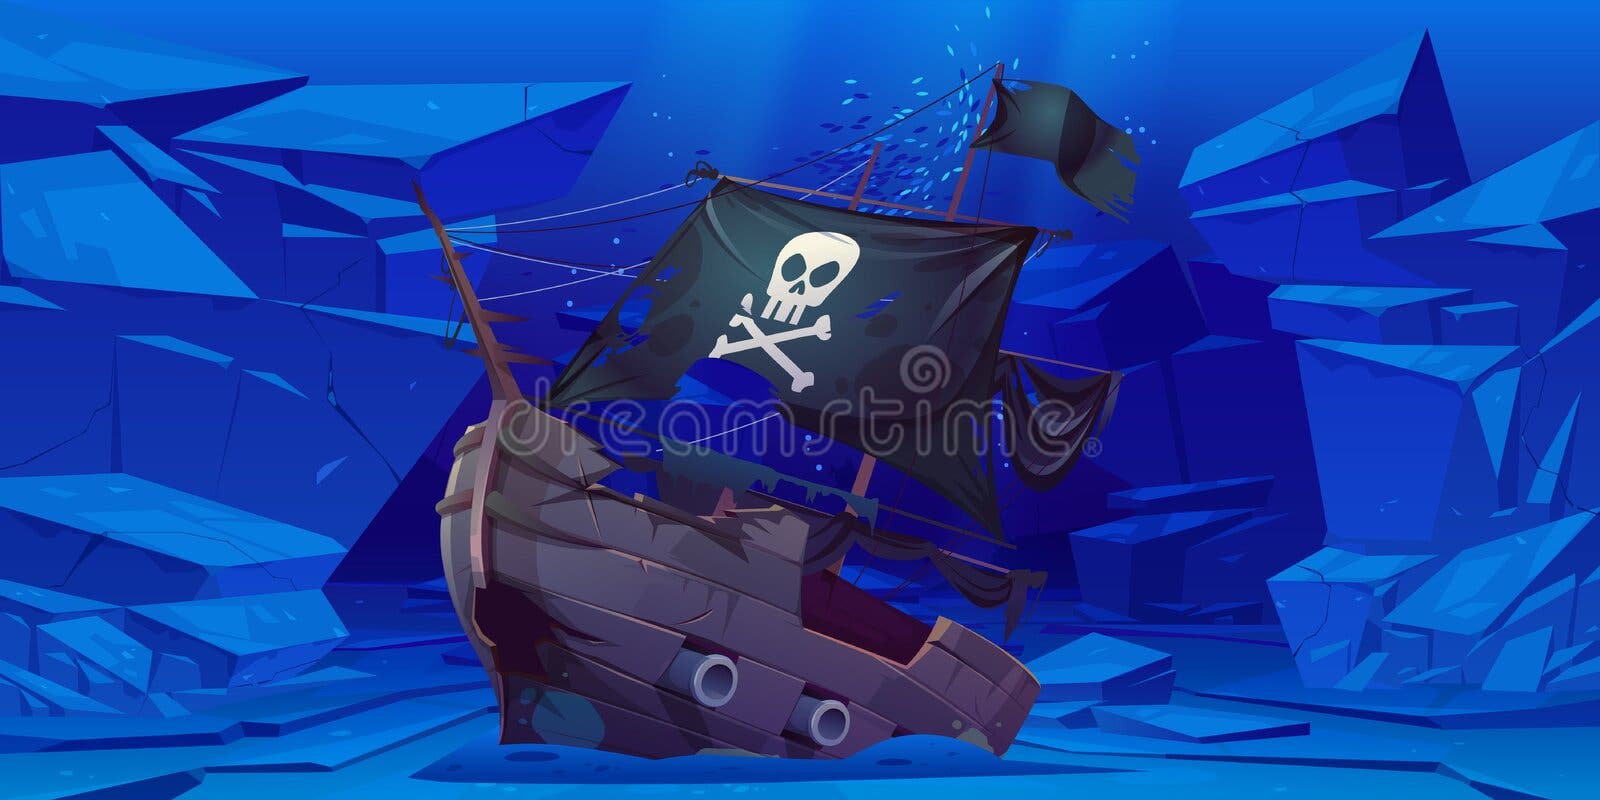 Cartoon Pirate Ship Stock Illustrations – 18,630 Cartoon Pirate